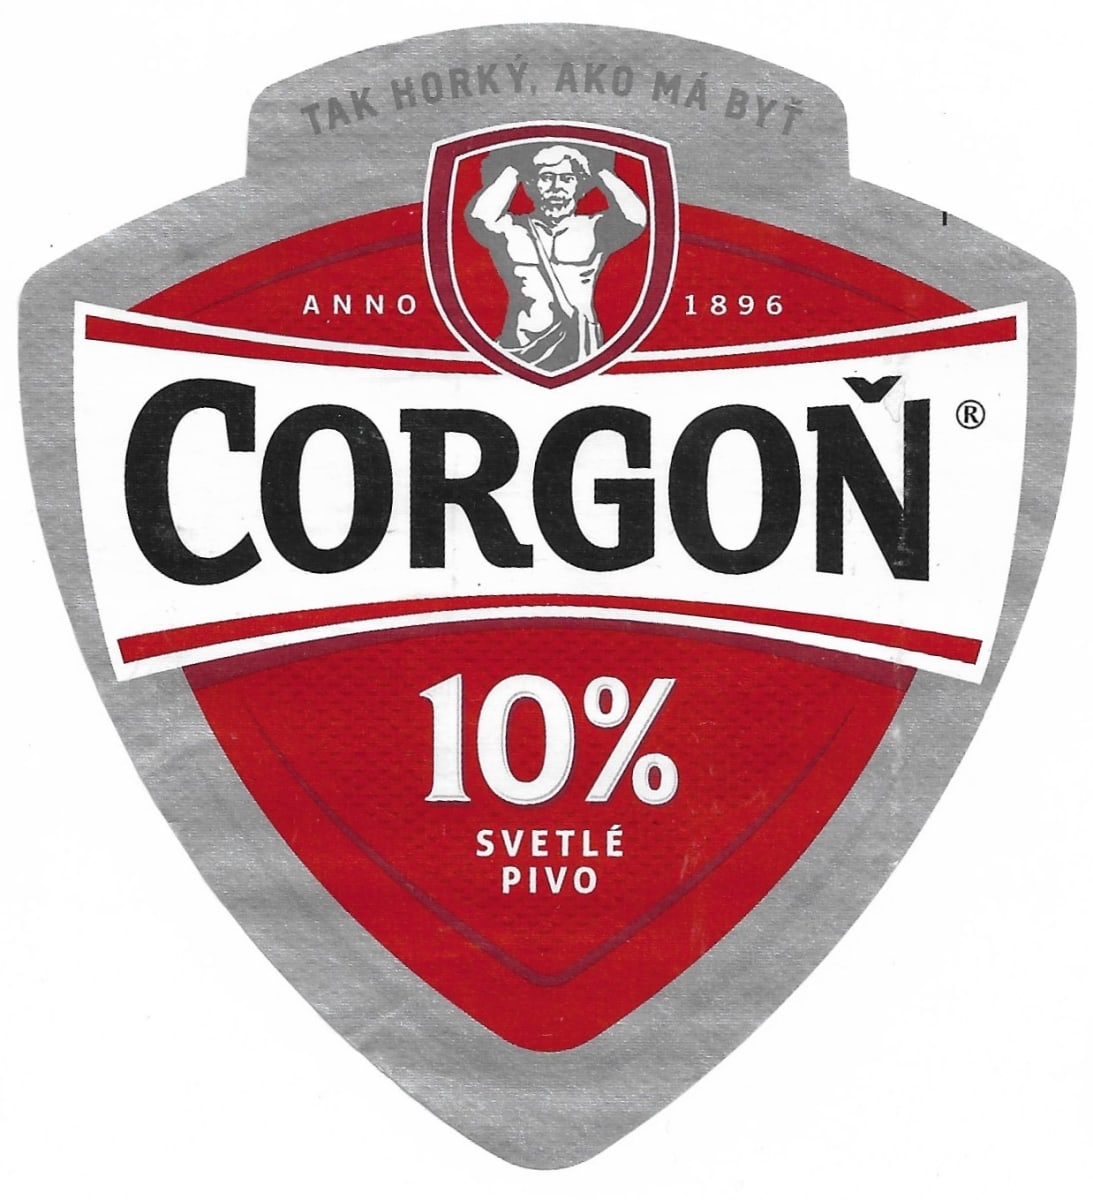 Corgoň 10 svetlé pivo